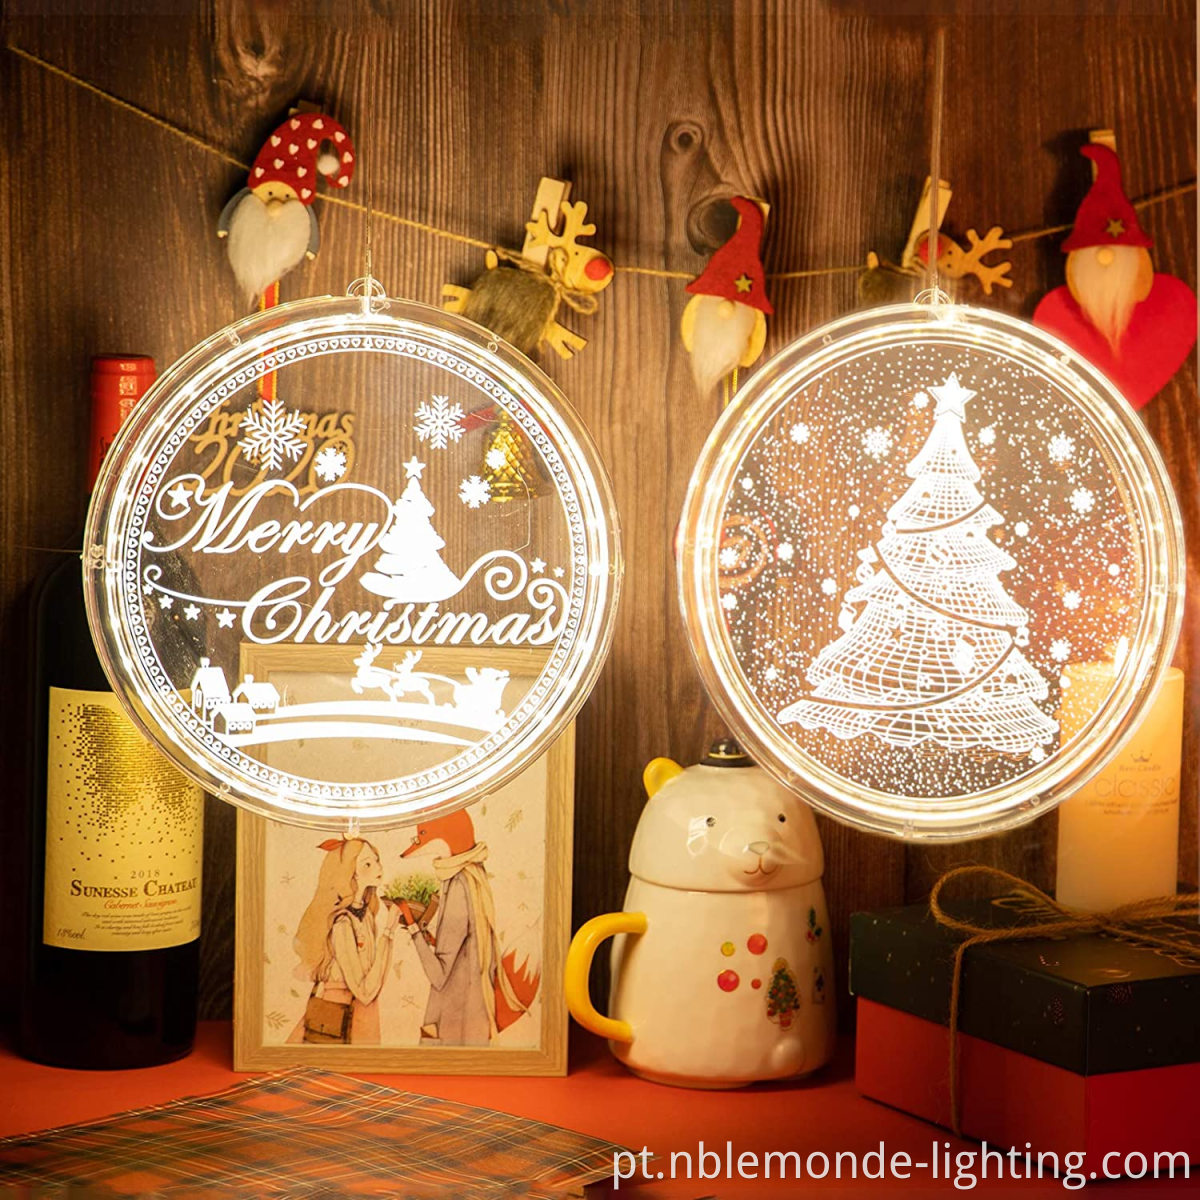 Merry Christmas decoration LED lights